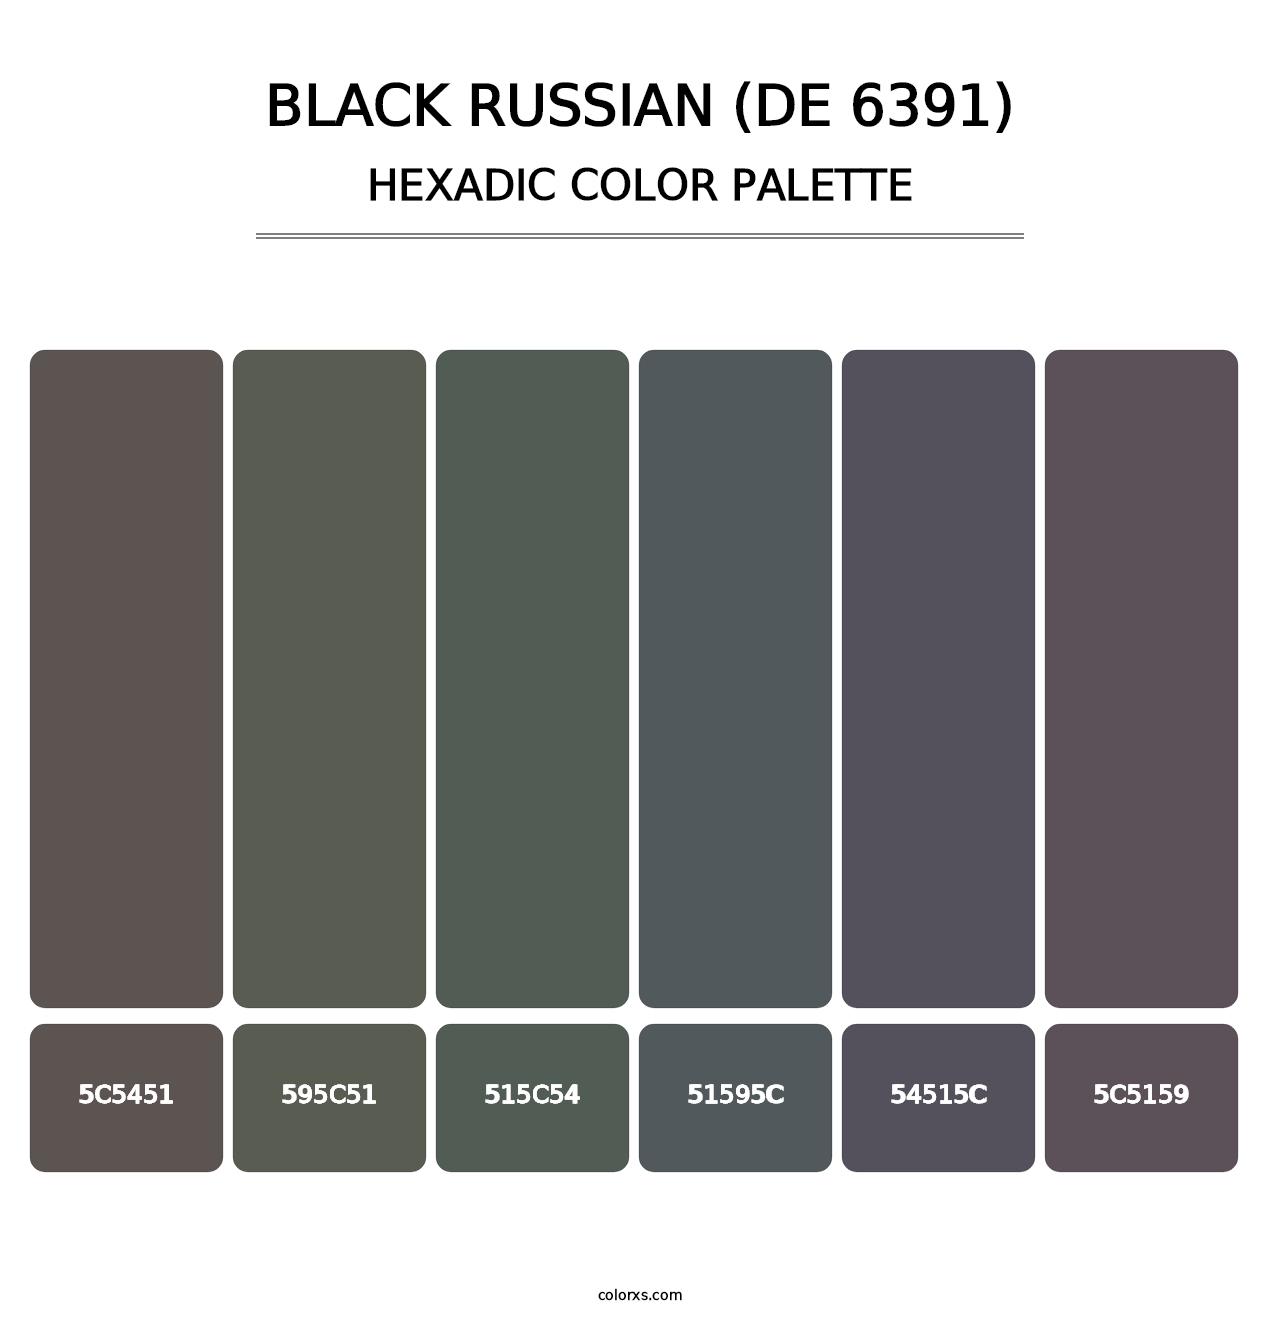 Black Russian (DE 6391) - Hexadic Color Palette